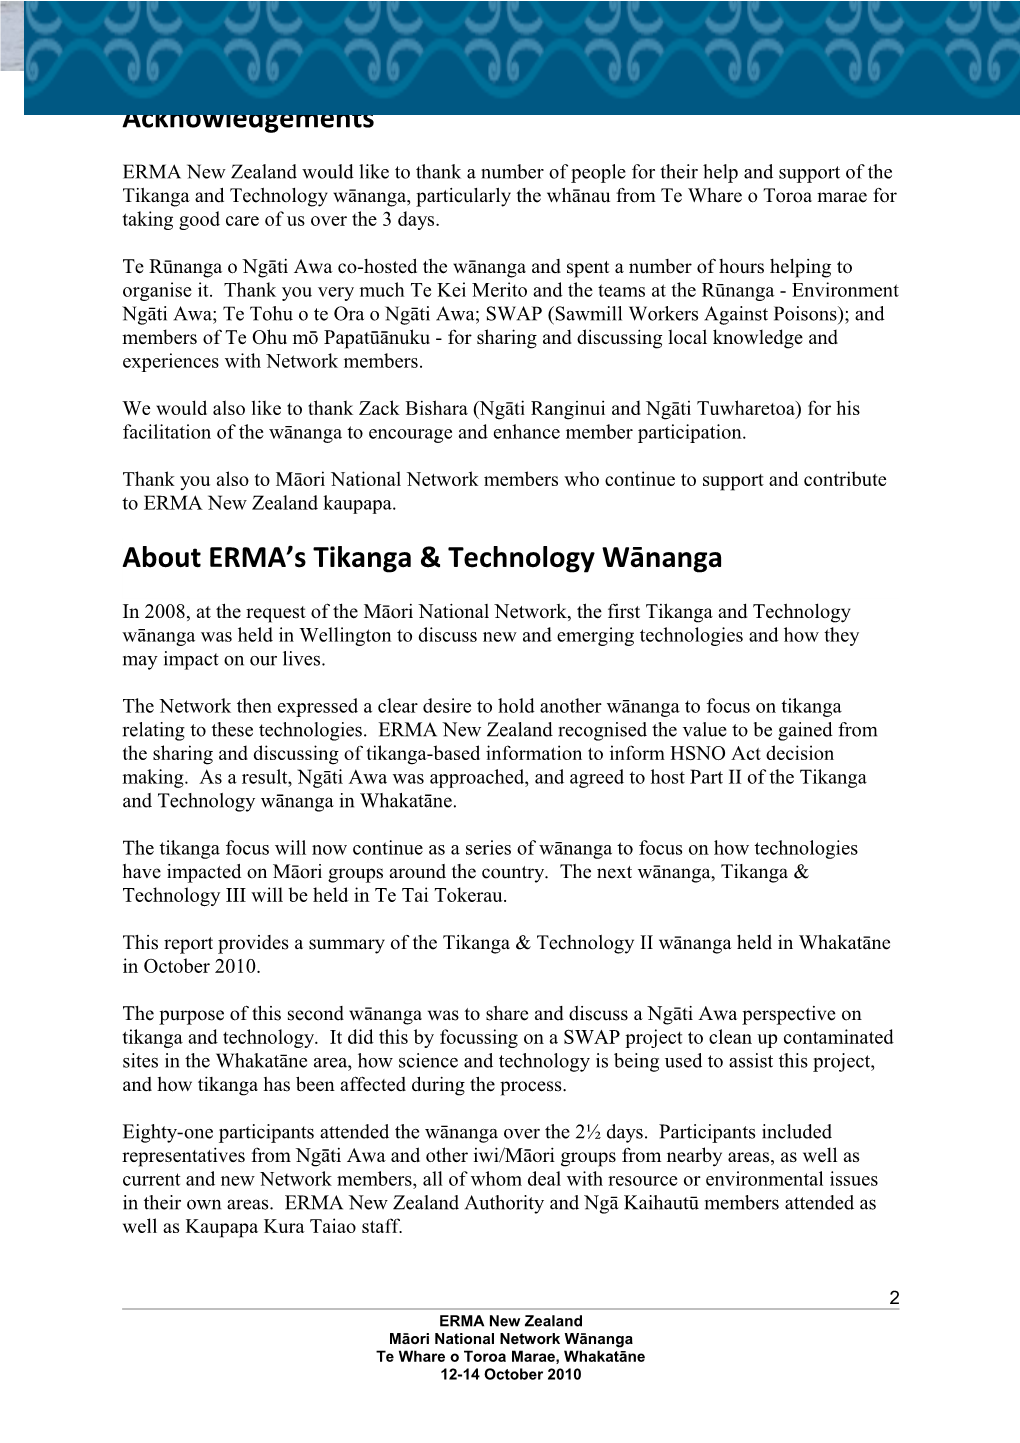 Final Report - Tikanga And Technology II, 2010